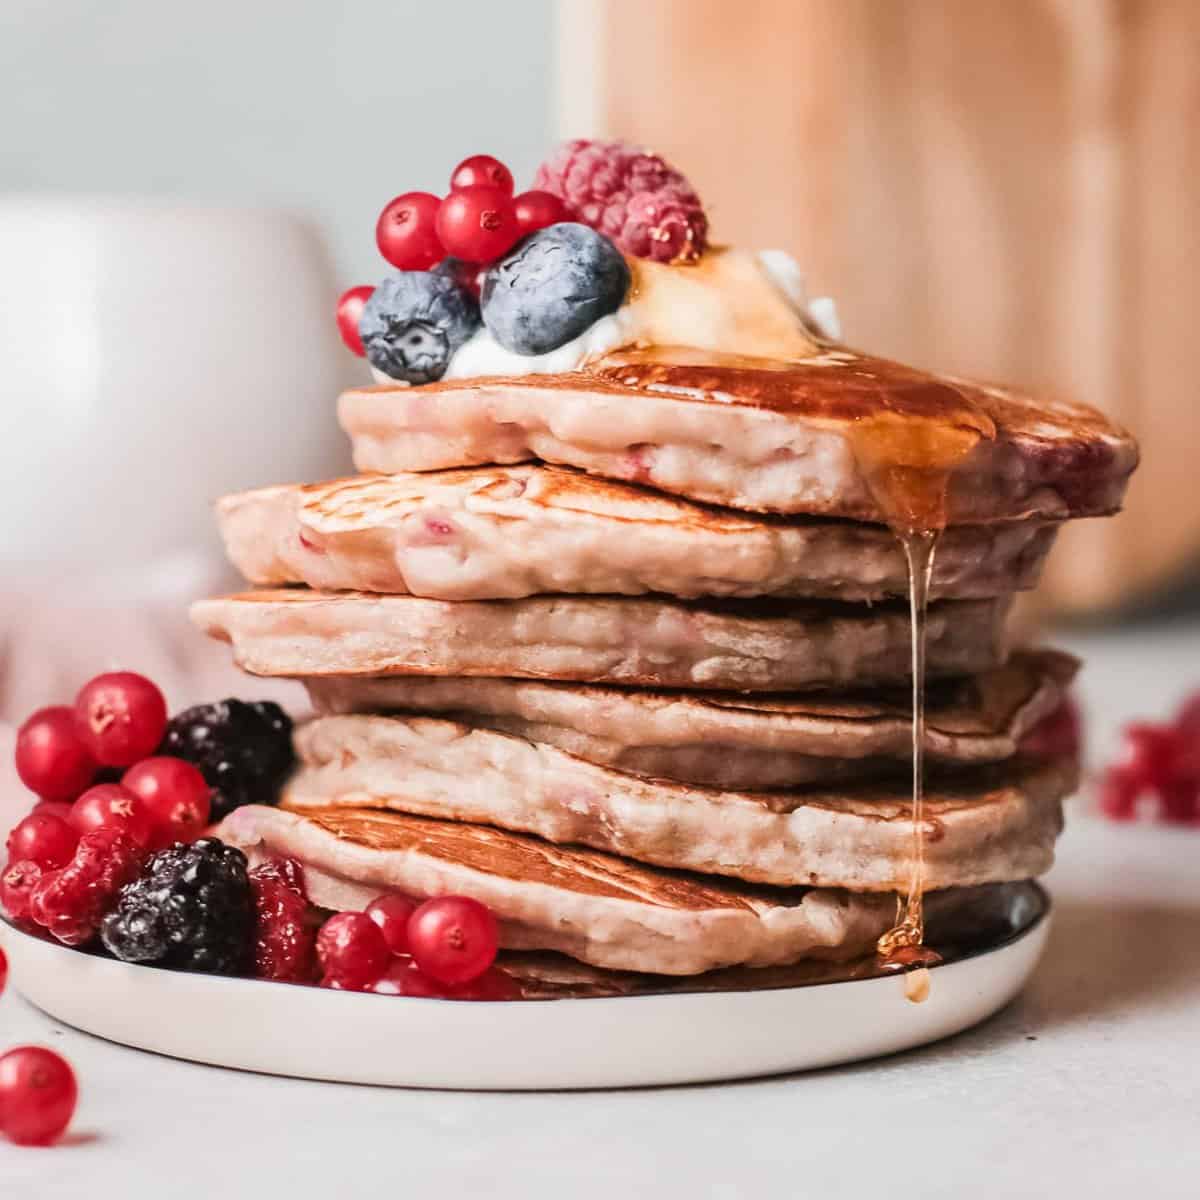 https://pancakerecipes.com/wp-content/uploads/2021/03/raspberry-pancakes-web-36-SQUARE.jpg